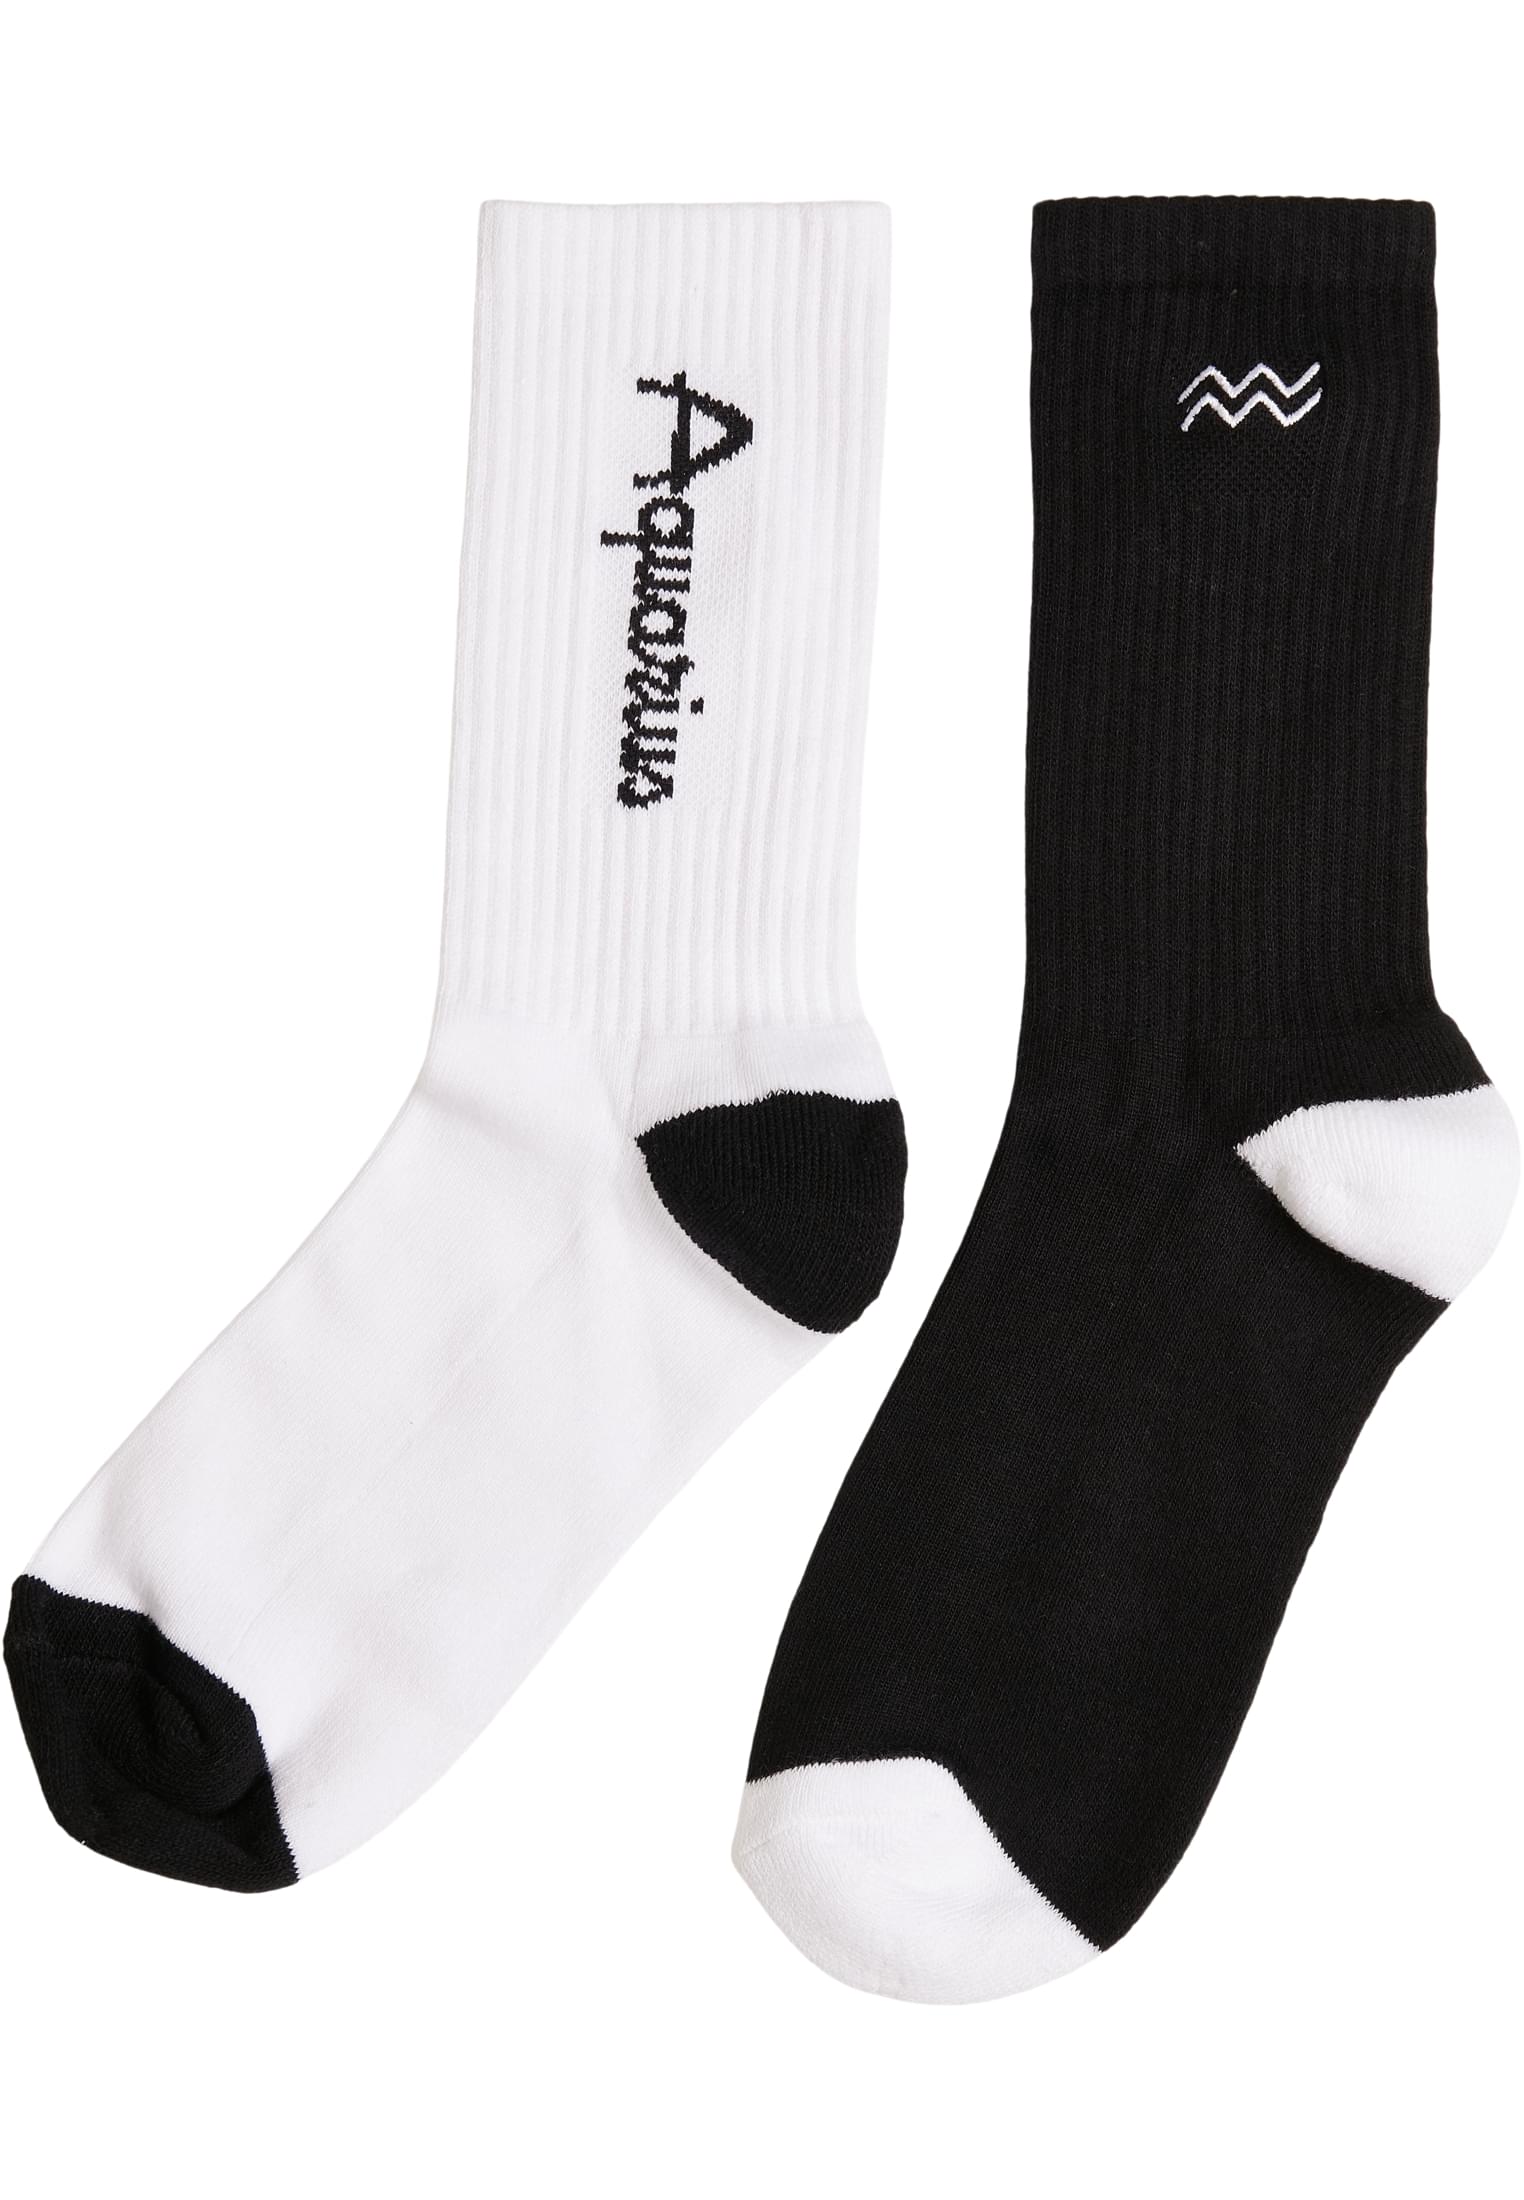 Zodiac Socks 2-Pack Black/White Aquarius